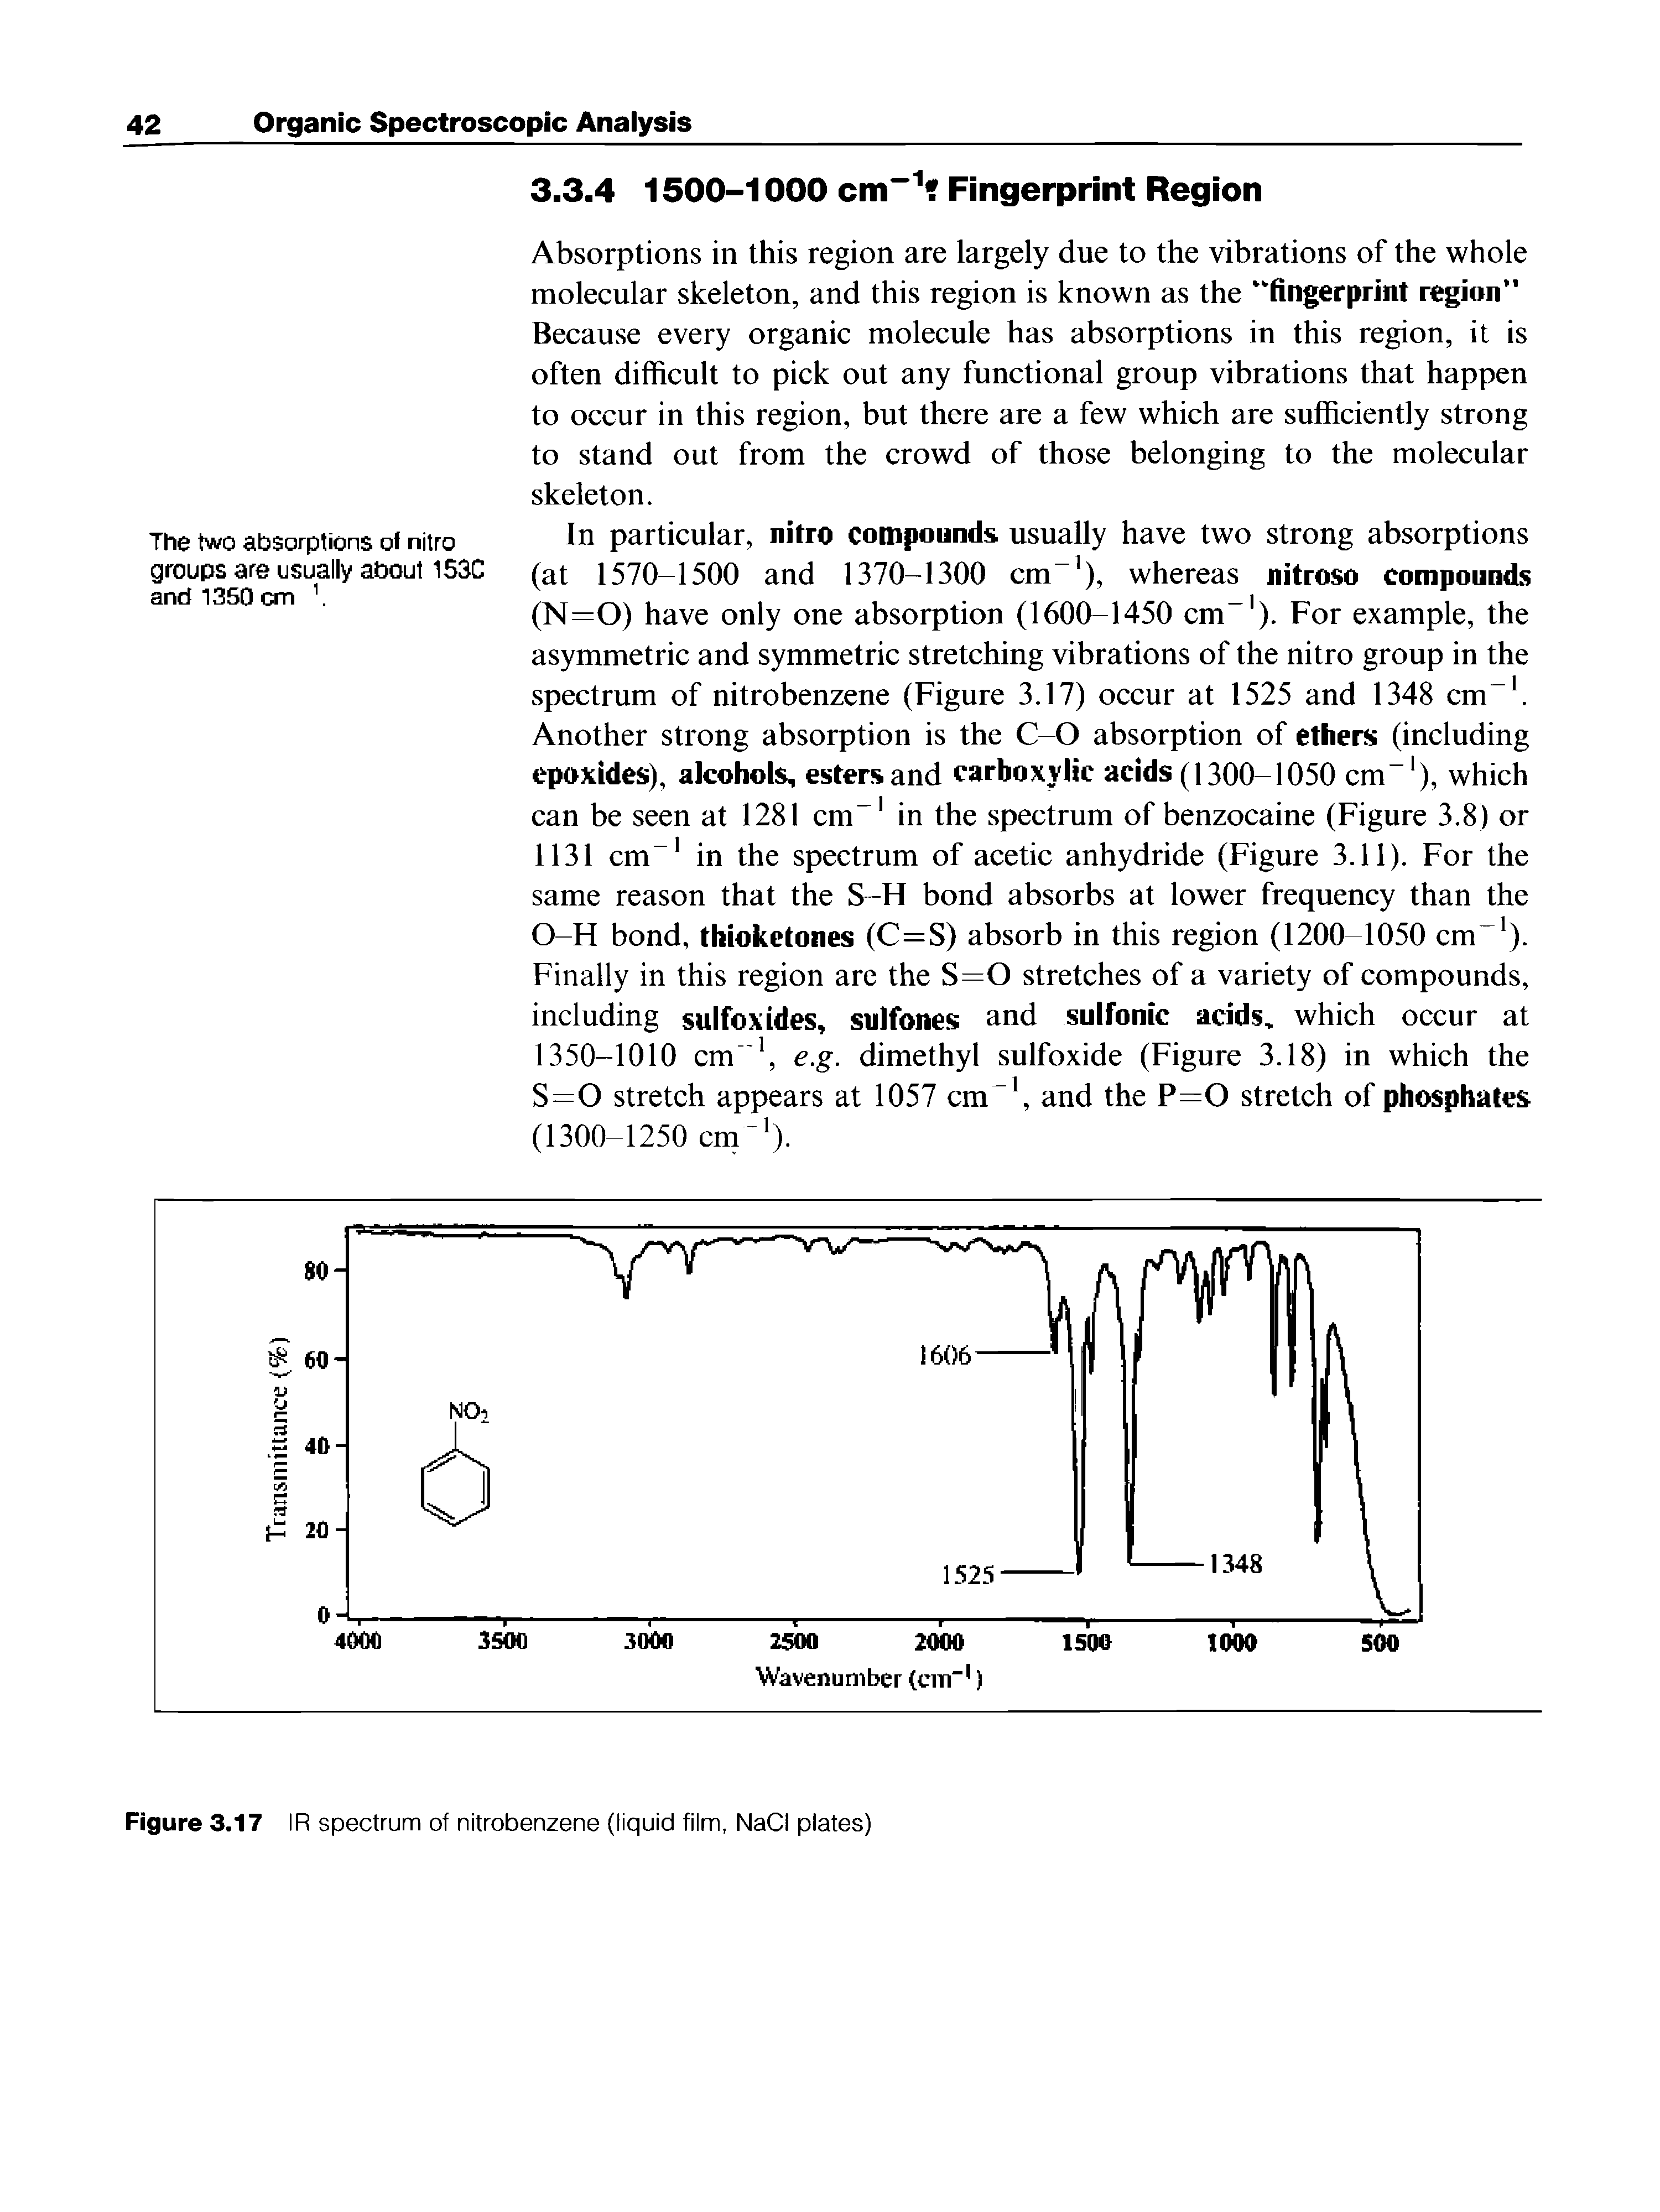 Figure 3.17 IR spectrum of nitrobenzene (liquid film, NaCl plates)...